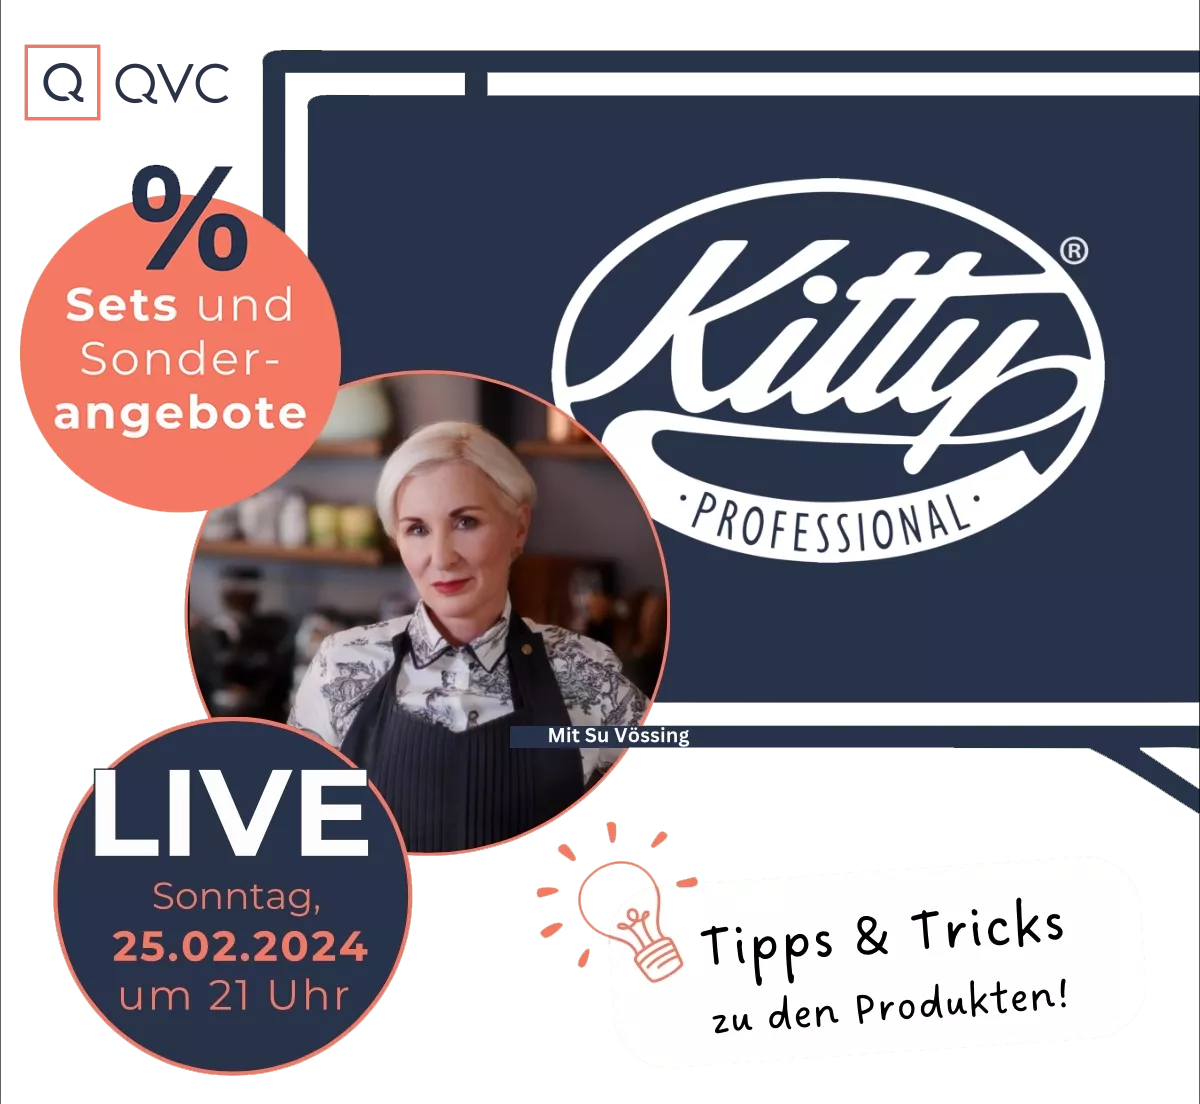 Kitty Professional LIVE auf QVC